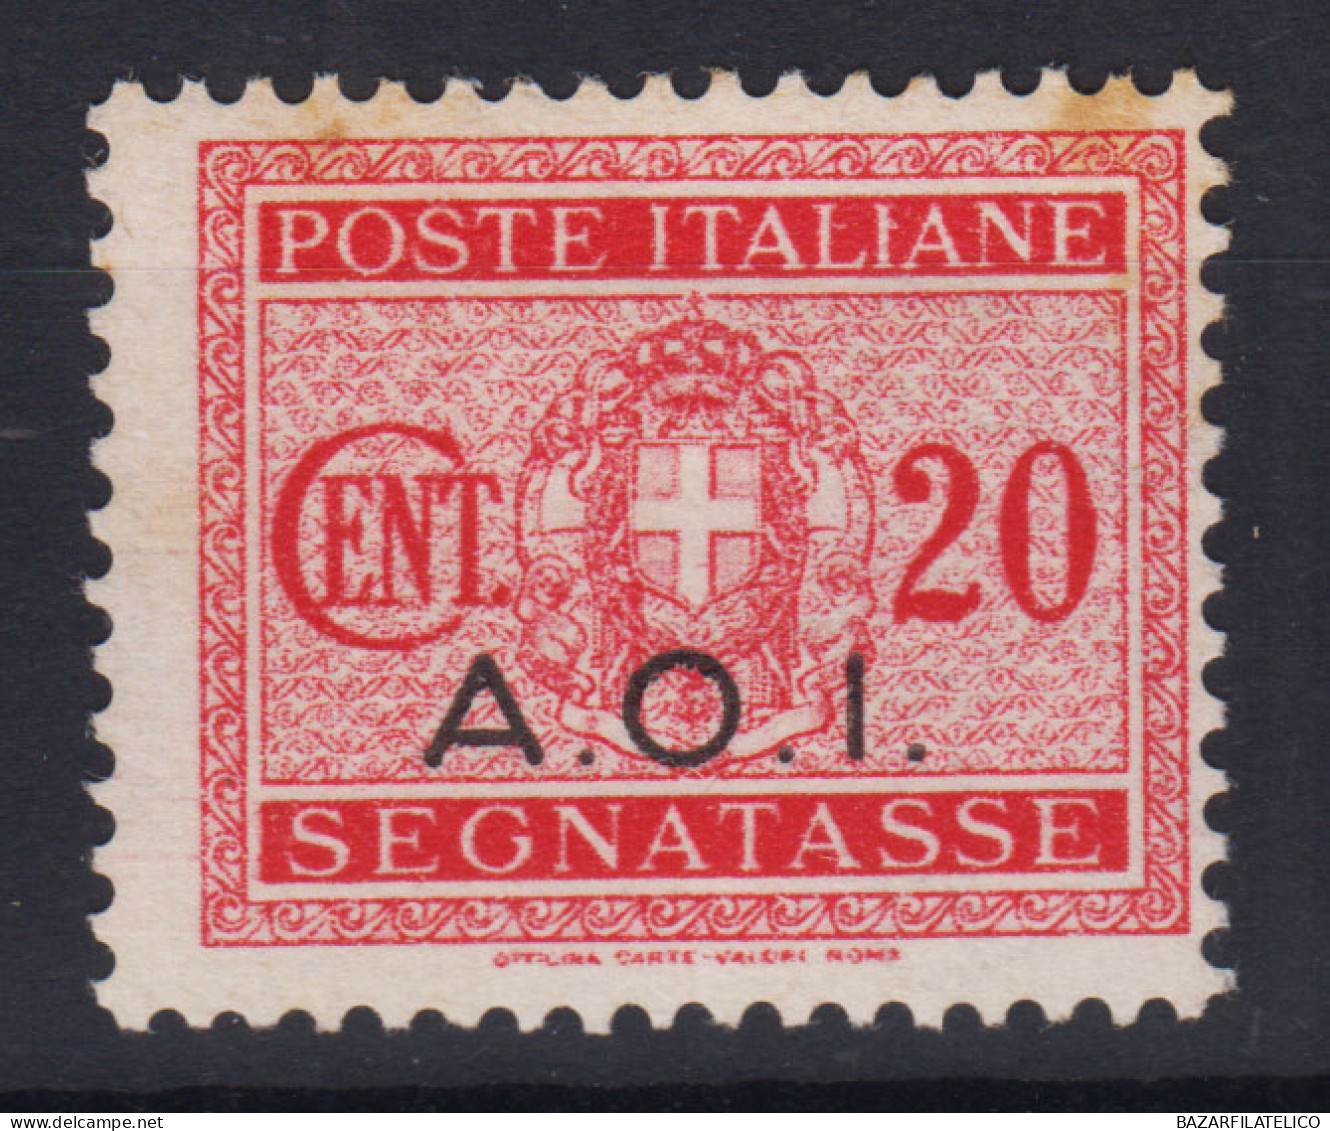 COLONIE AFRICA ORIENTALE ITALIANA 1939-40 SEGNATASSE 20 CENTESIMI N.3 G.O MH* - Africa Oriental Italiana